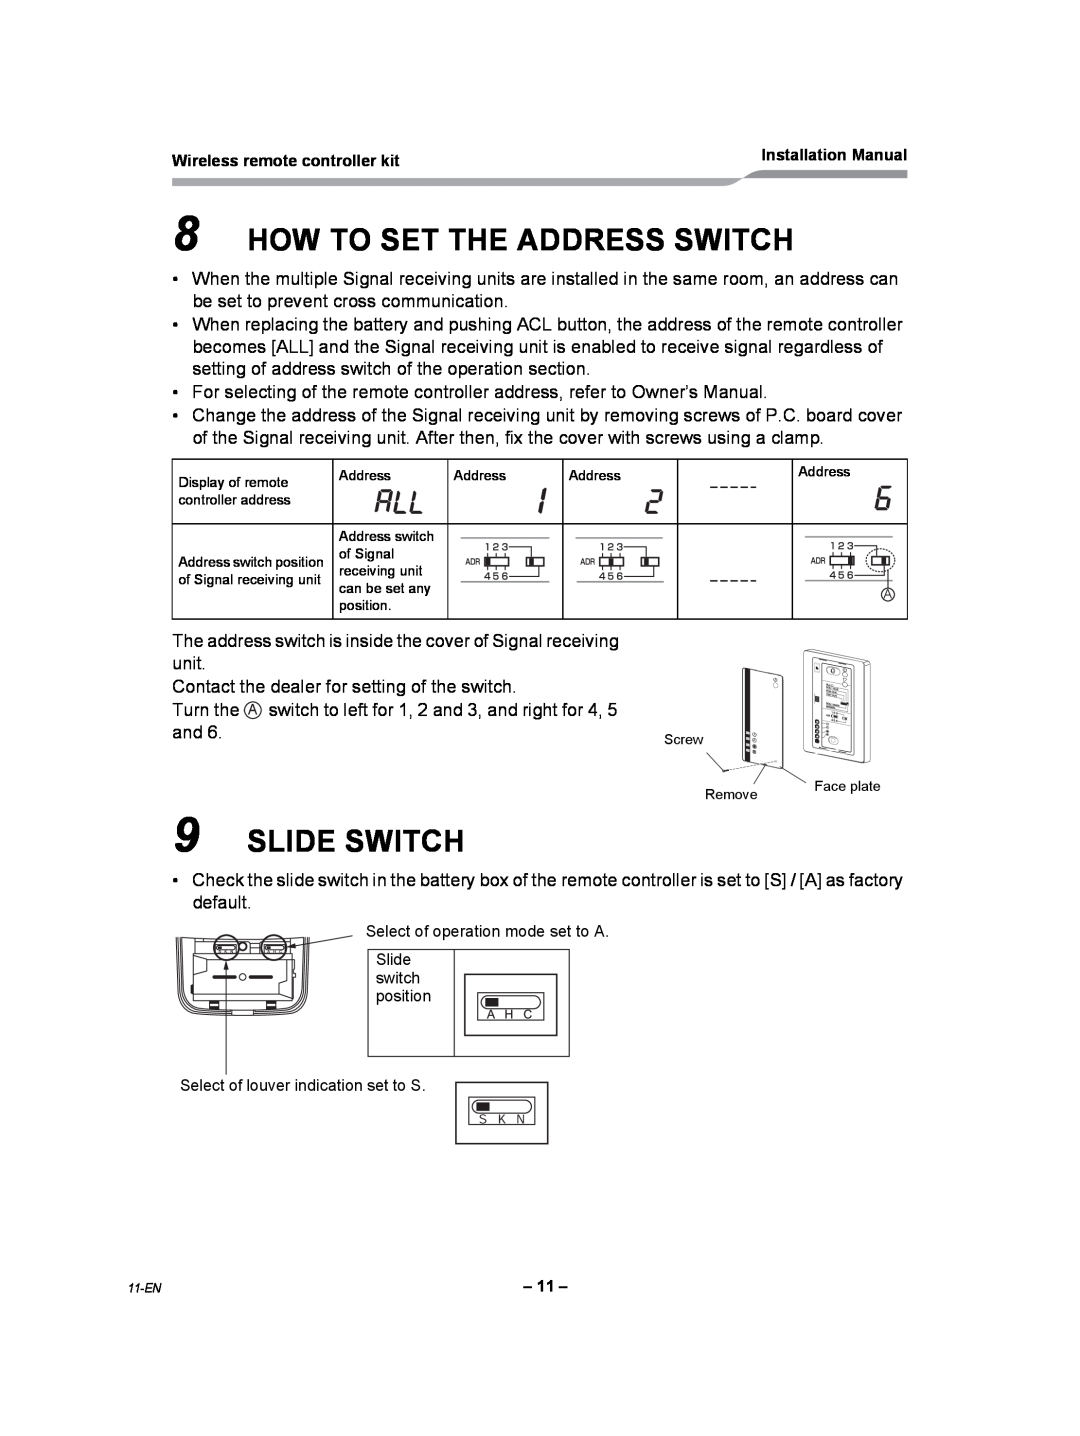 Toshiba TCB-AX21UL installation manual How To Set The Address Switch, Slide Switch 